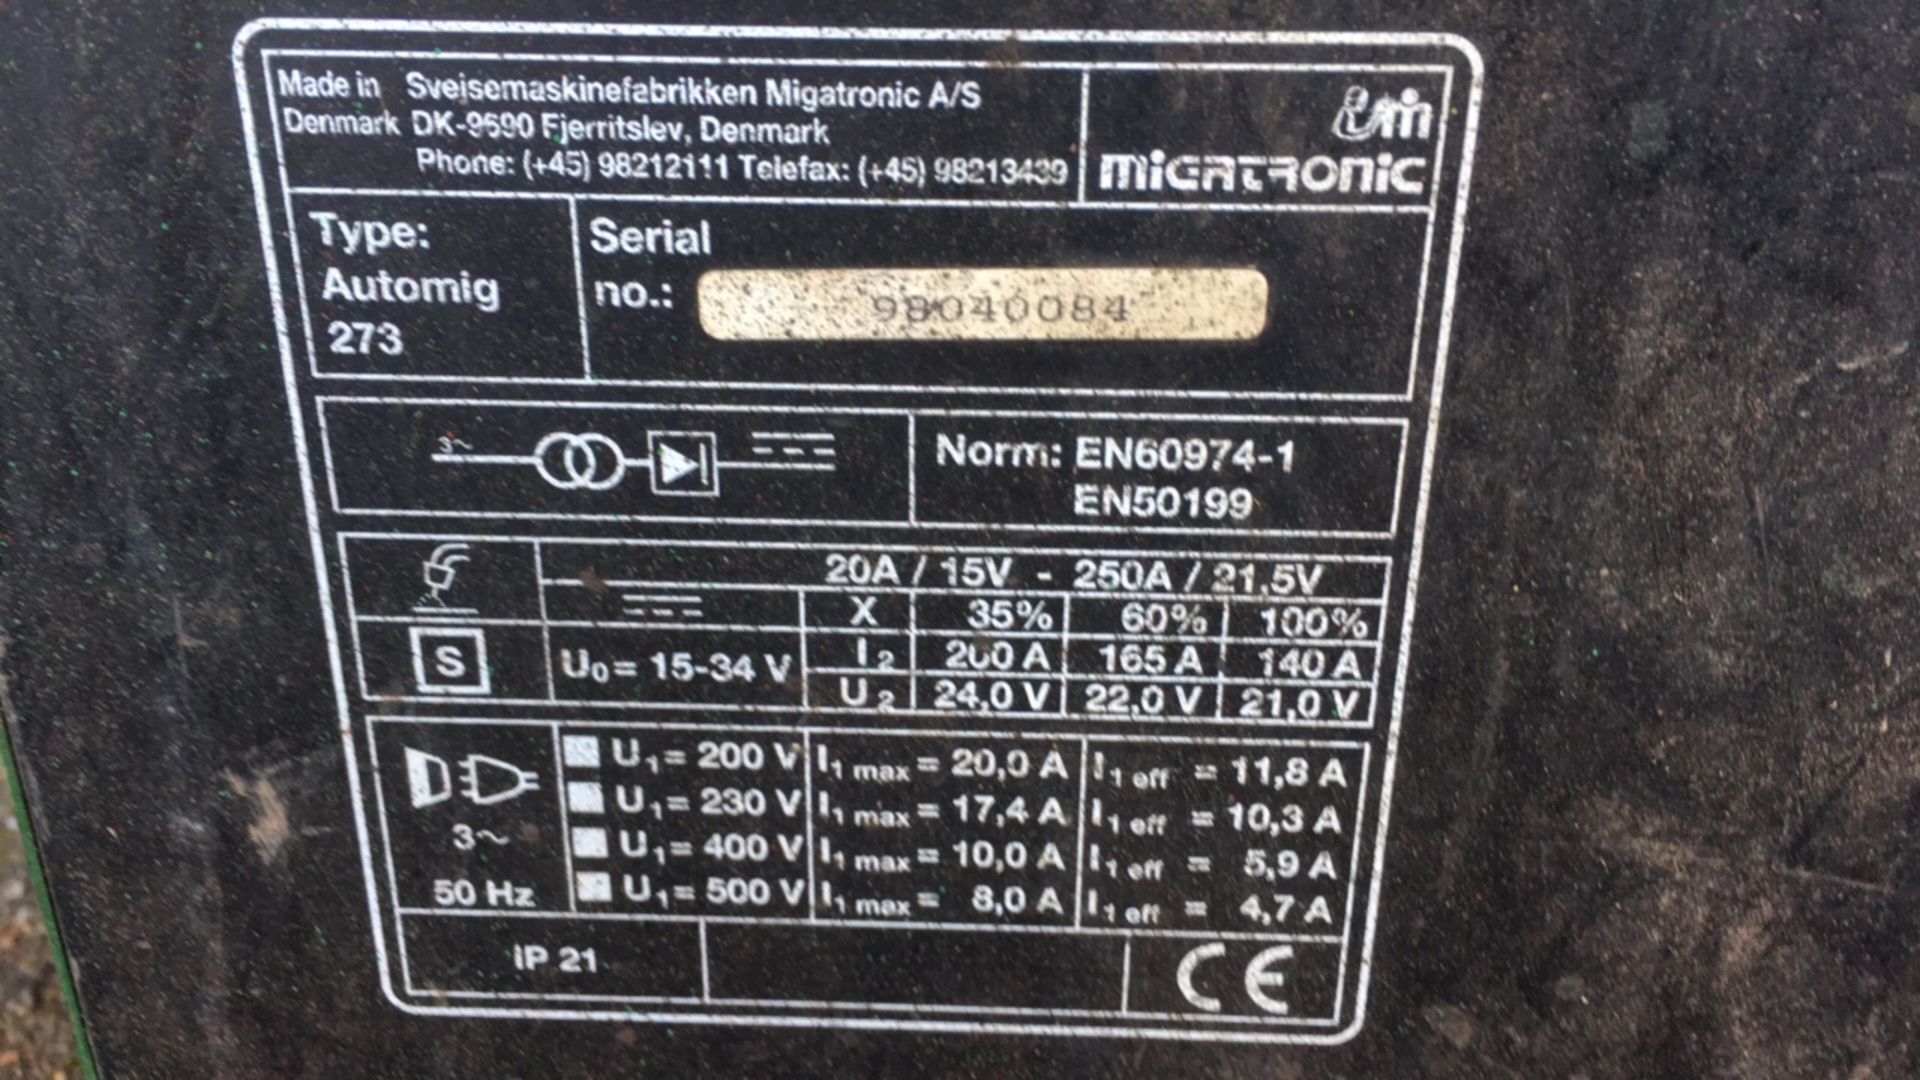 Migatronic Automig 273 (L#WT1649 & N1192101) - Image 4 of 7